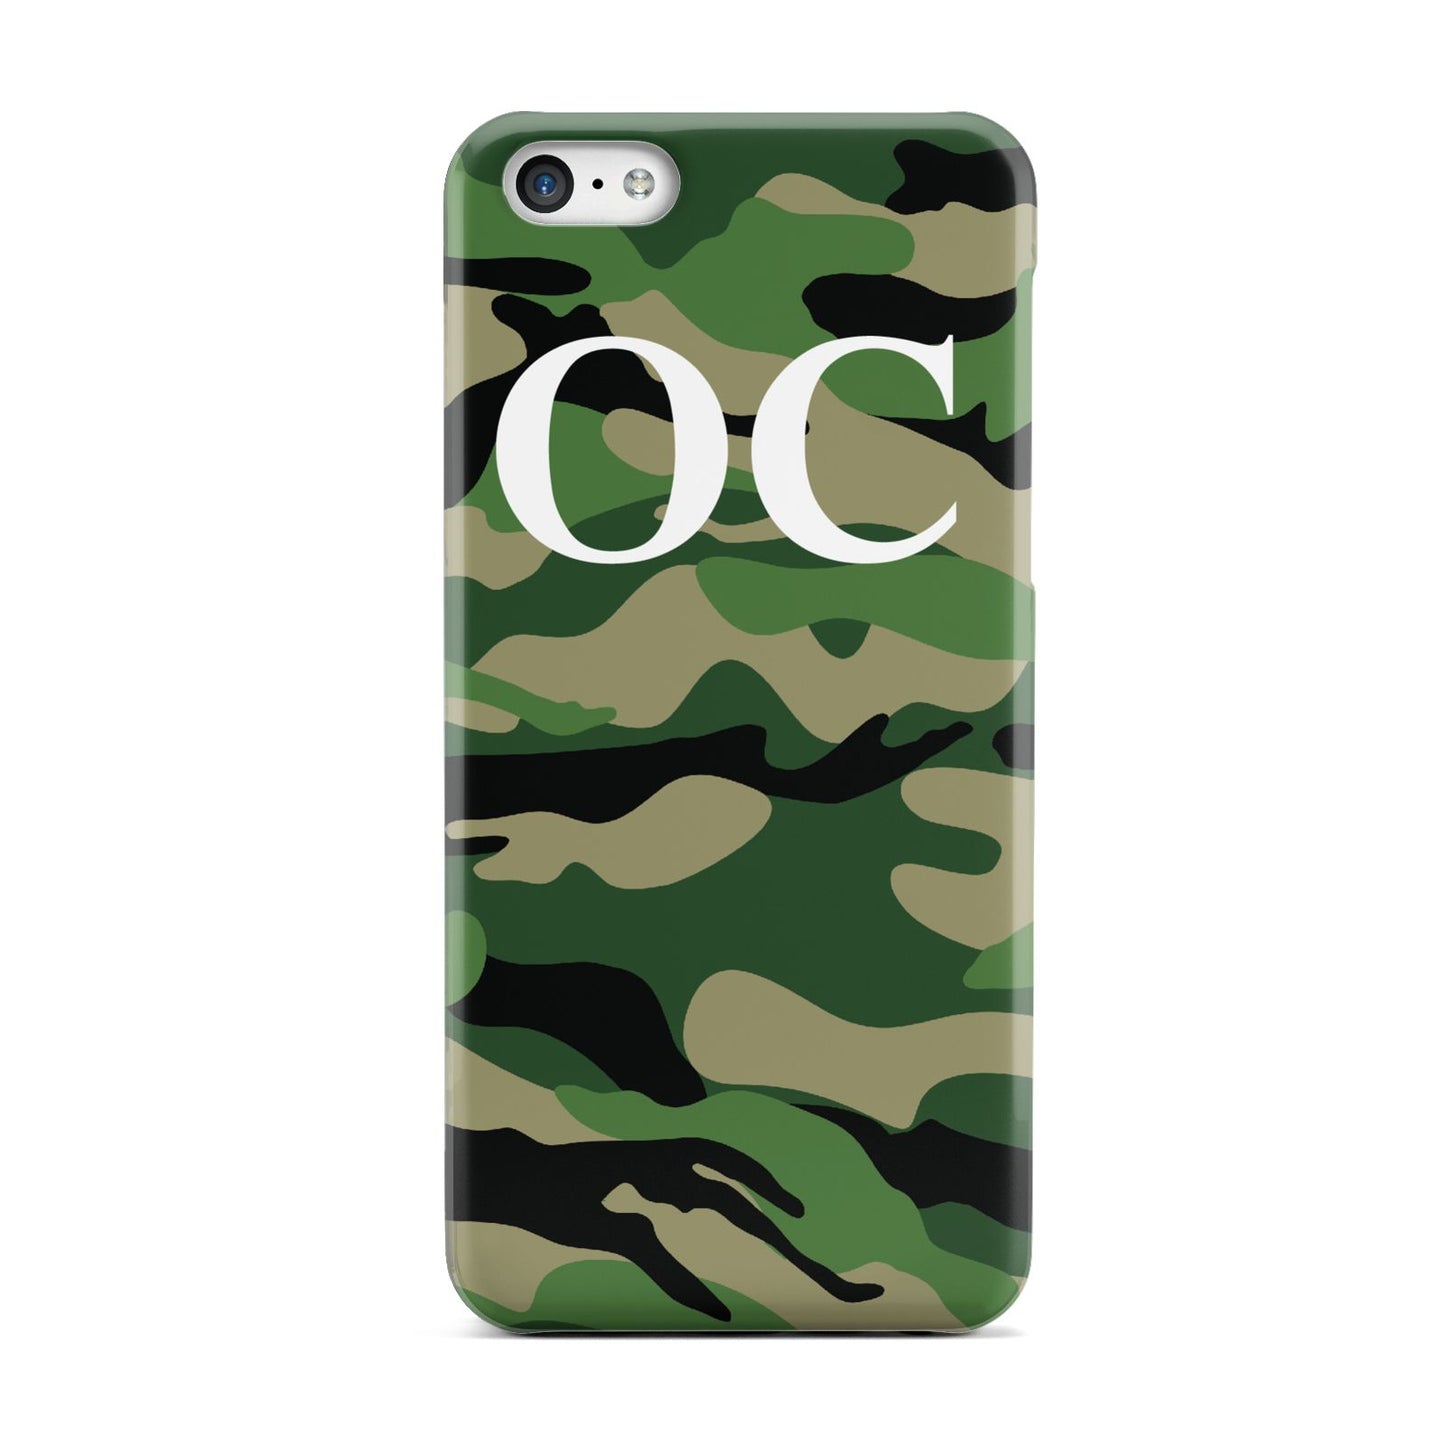 Personalised Camouflage Apple iPhone 5c Case